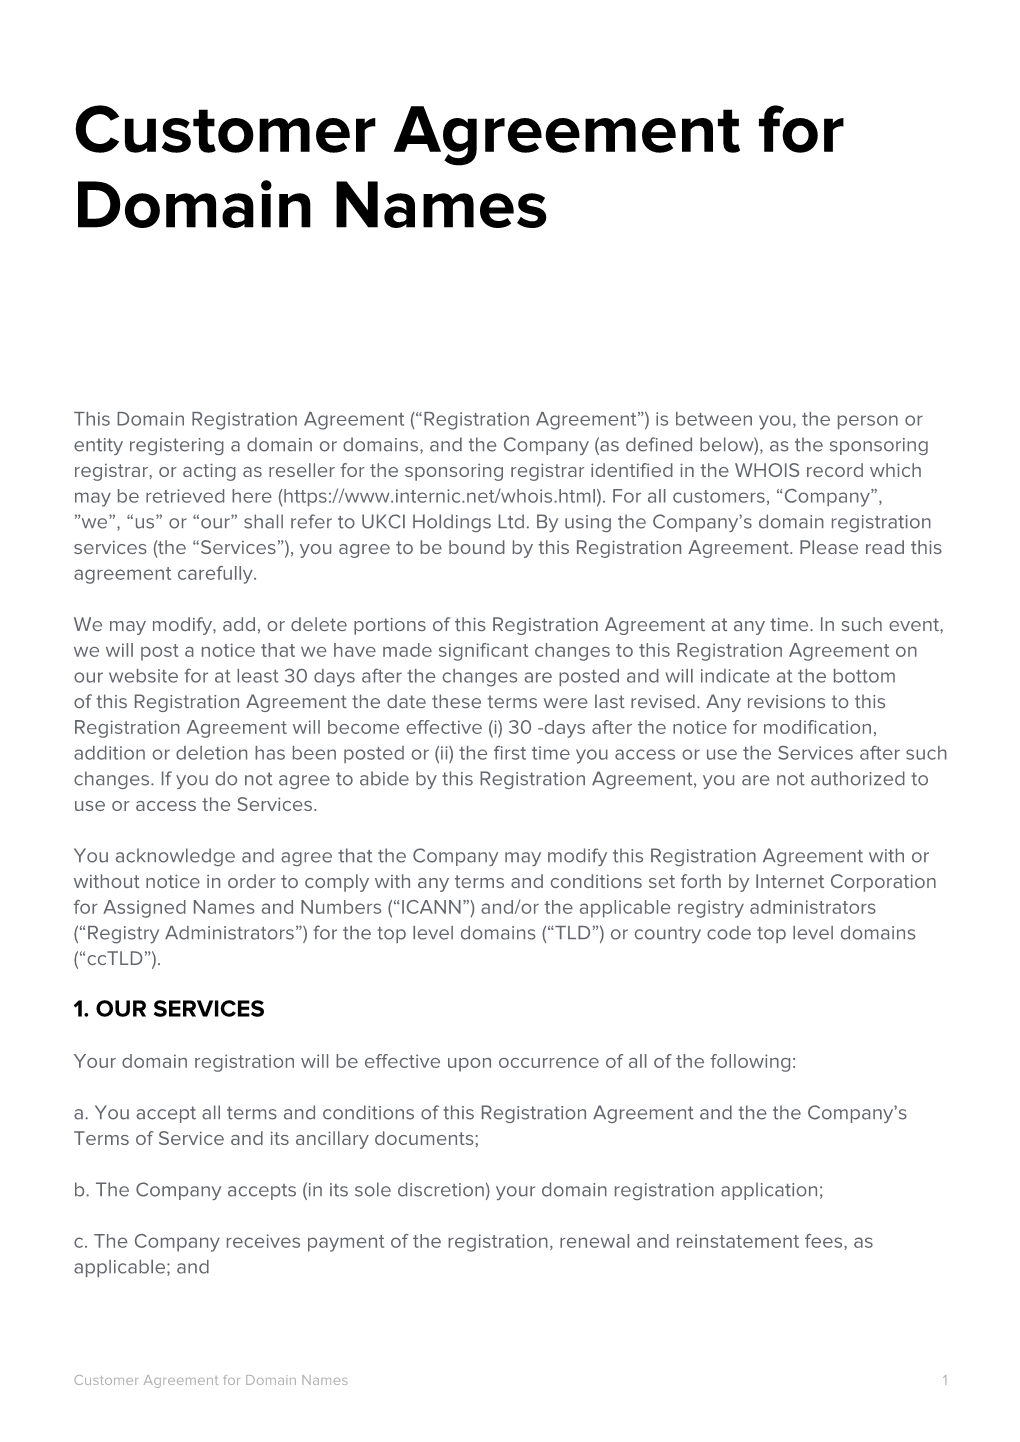 Customer Agreement for Domain Names